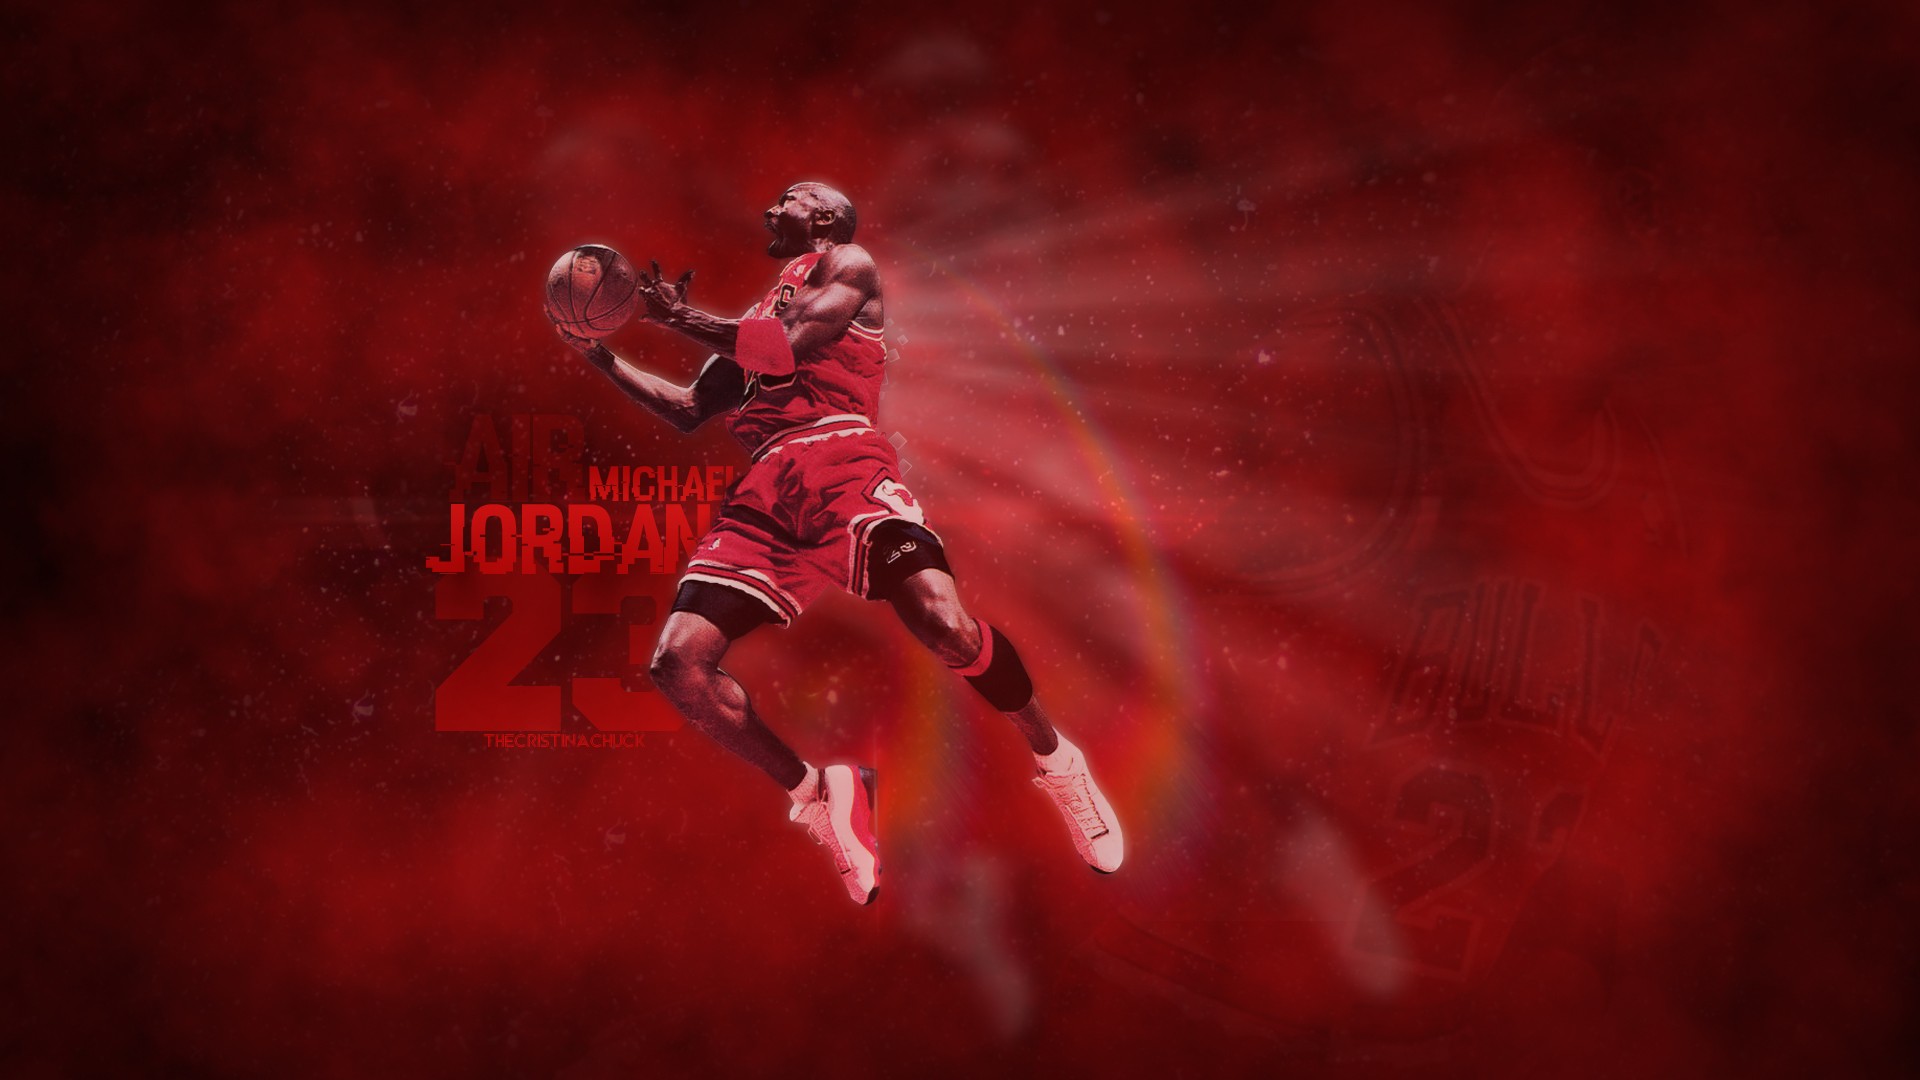 michael jordan wallpaper,rot,fußballspieler,spieler,american football,grafik